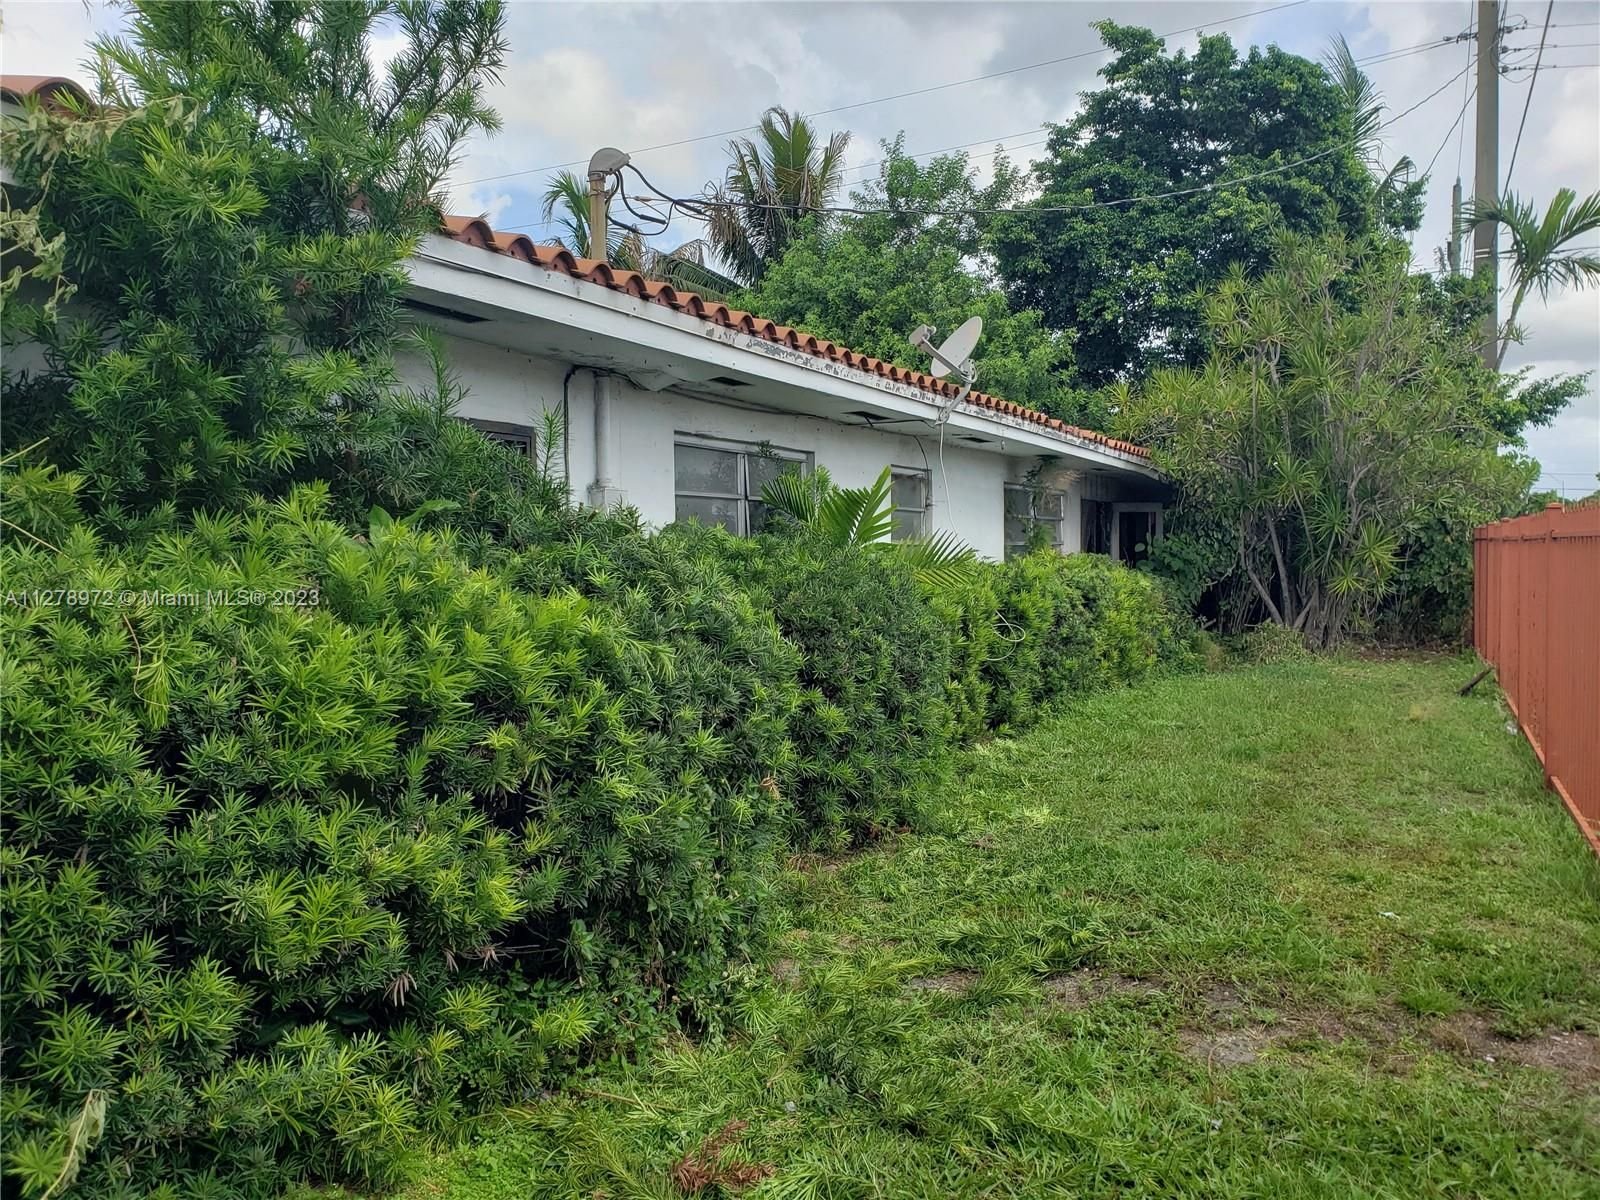 Real estate property located at 3201 80th St, Miami-Dade County, Miami, FL